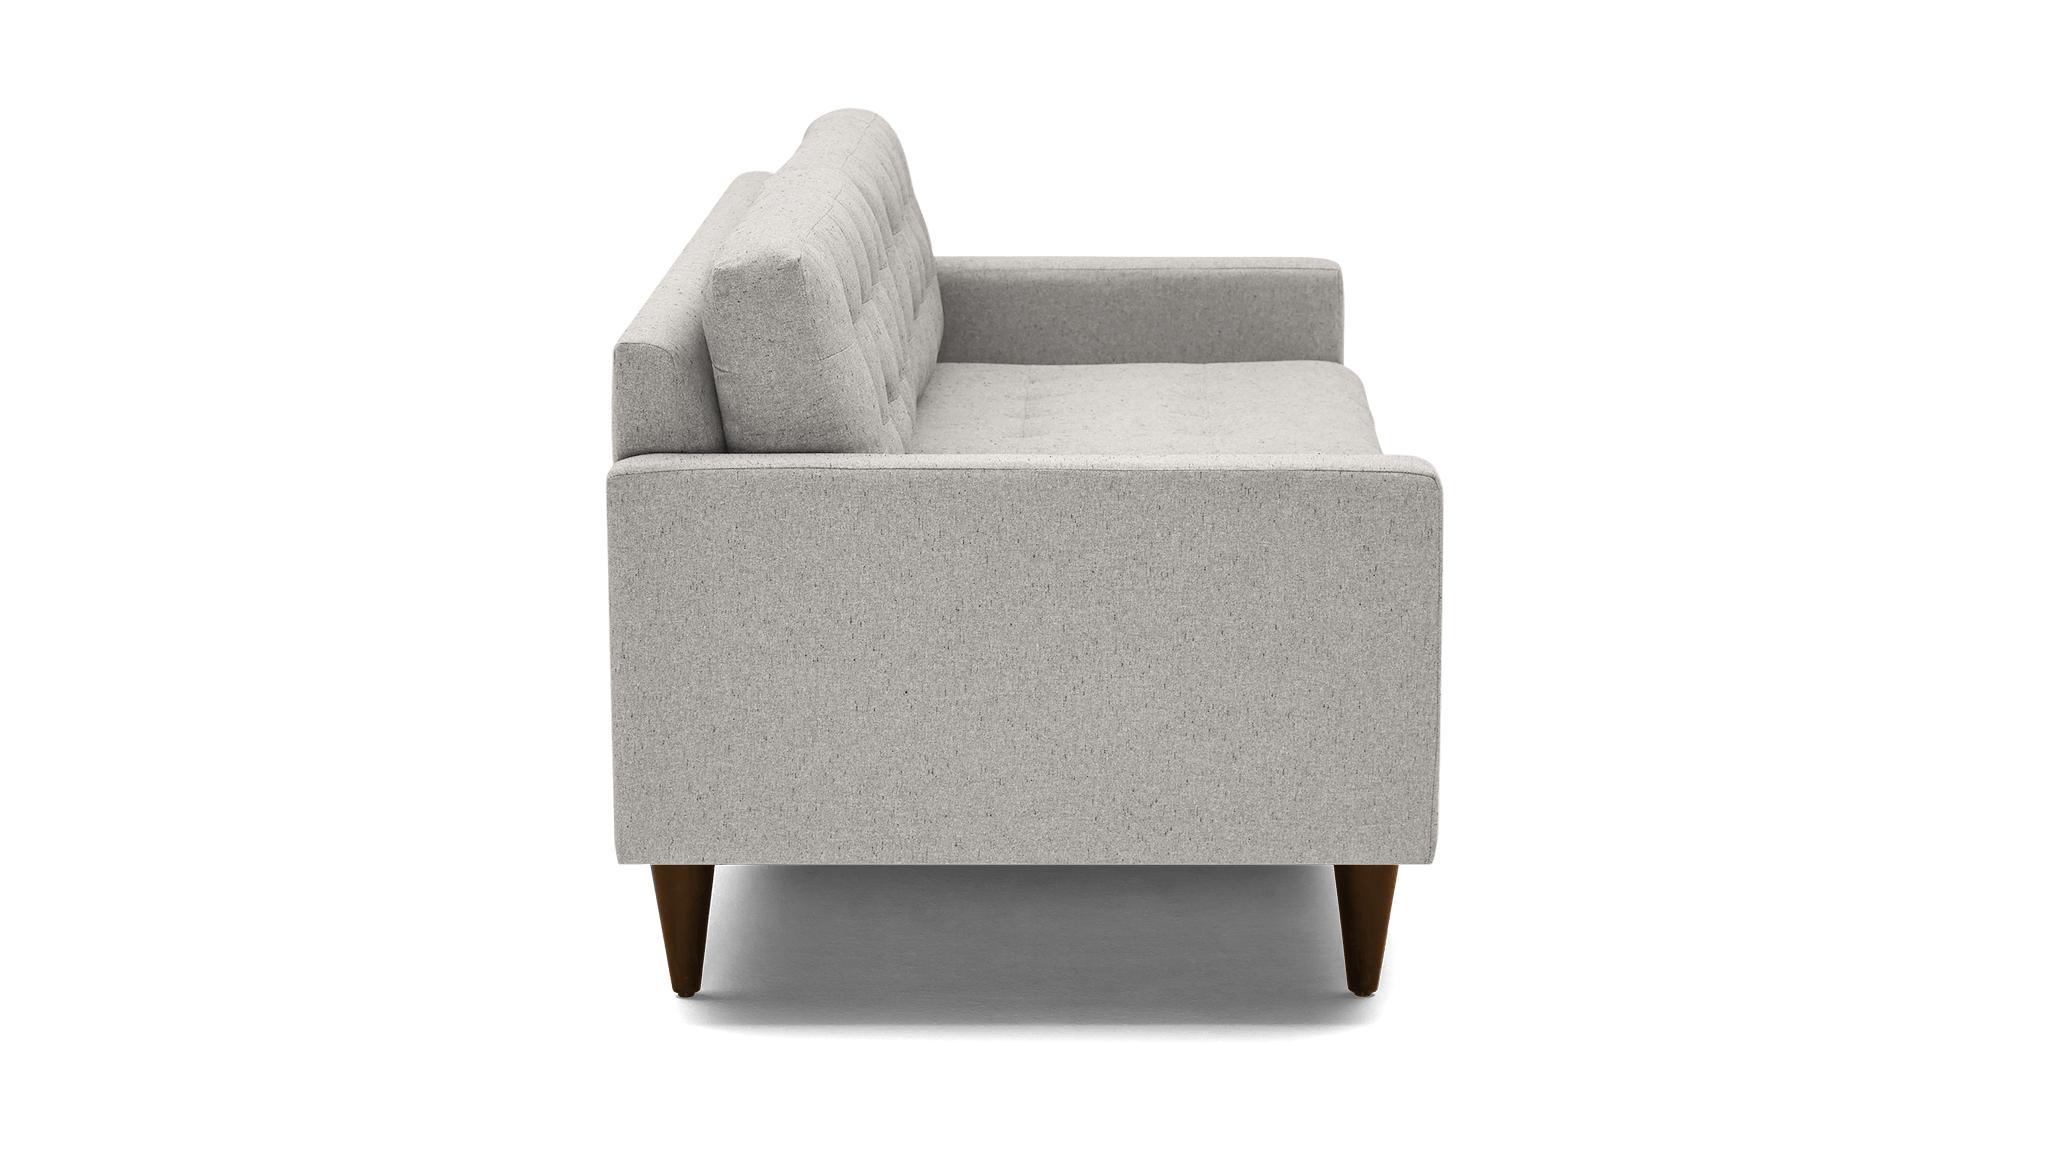 Beige/White Eliot Mid Century Modern Sofa - Merit Dove - Mocha - Image 2